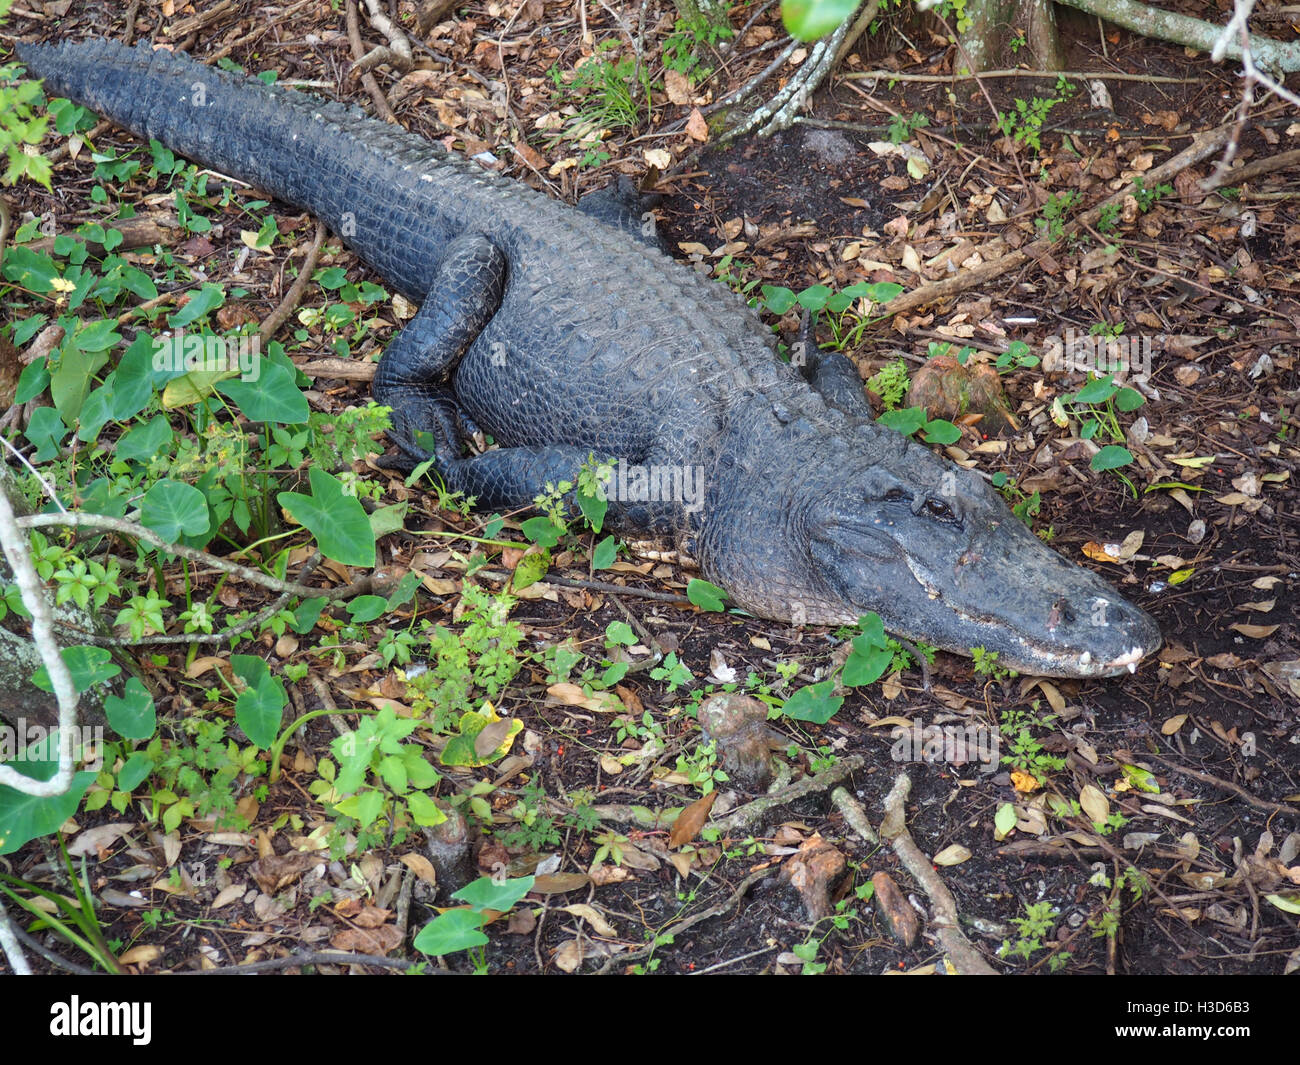 closeup image of an alligator on land Stock Photo